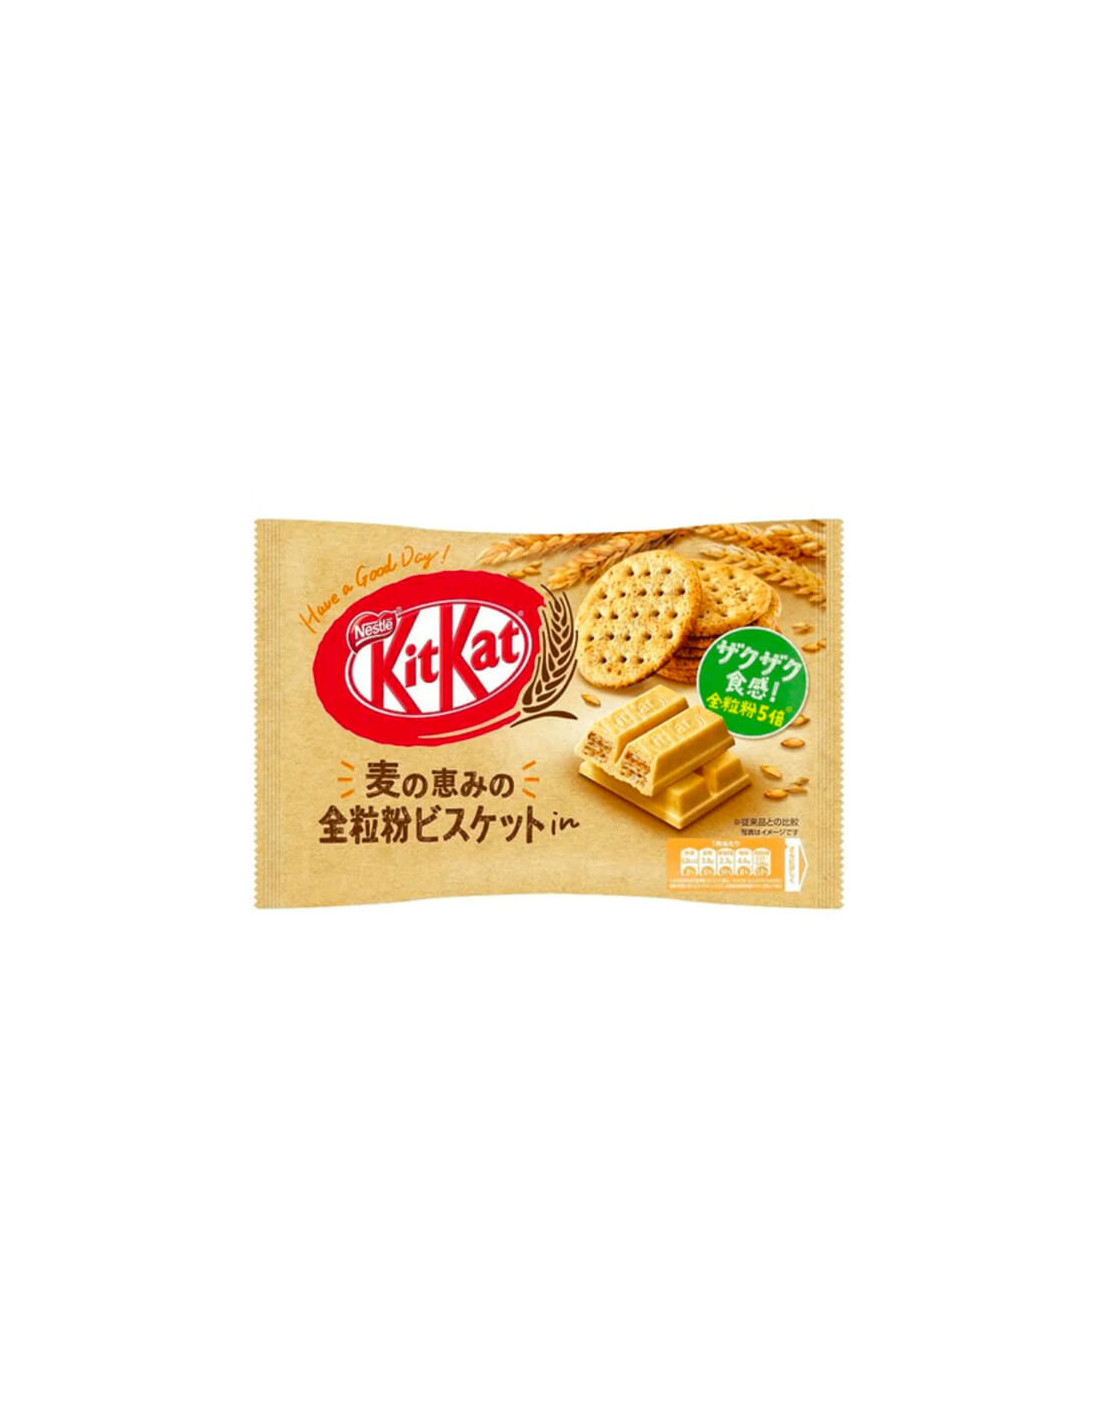 Kit Kat Whole Wheat Flour Biscuit Mini